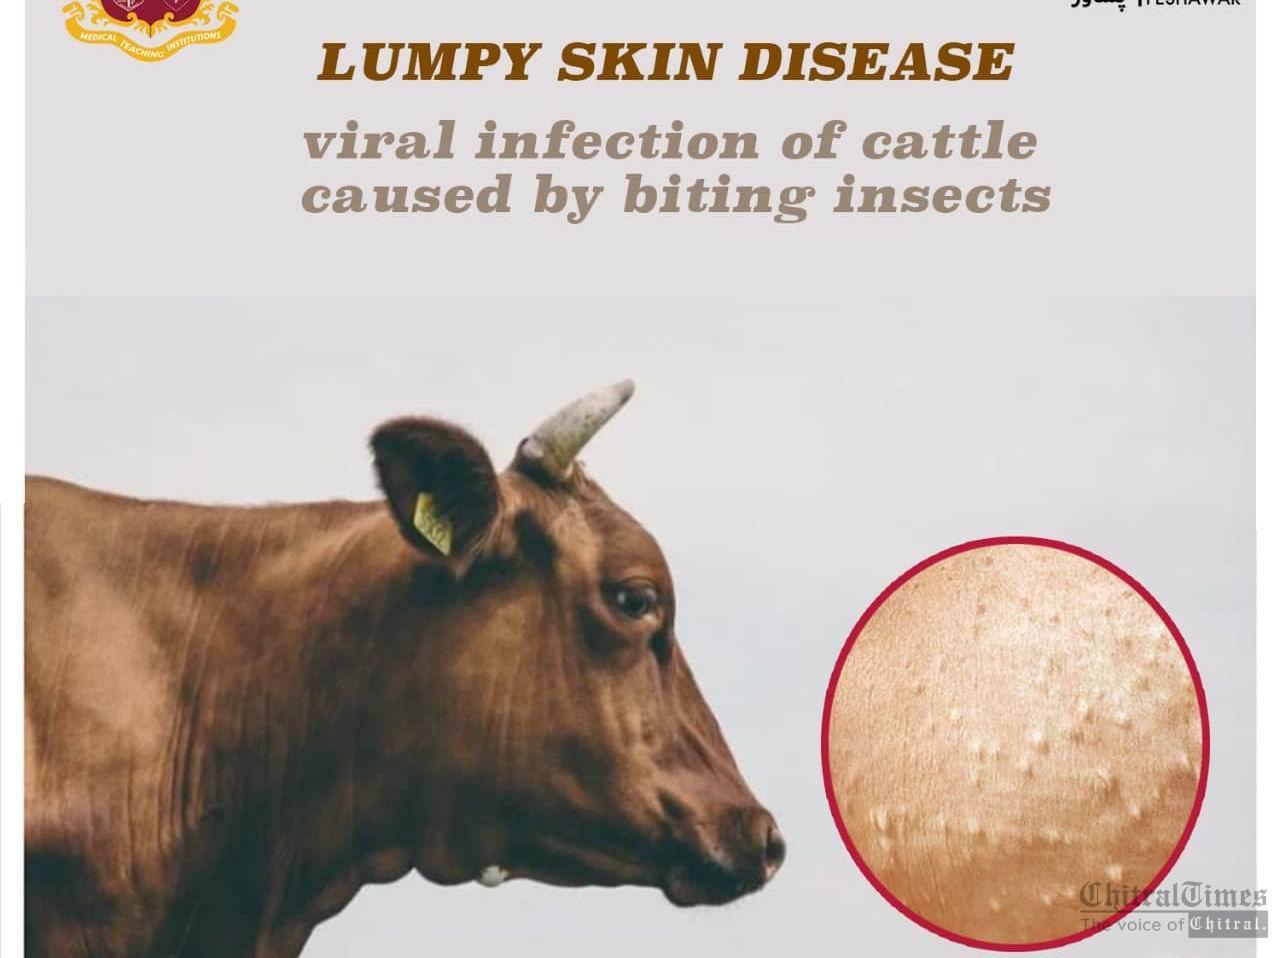 lumpy skin disease cow